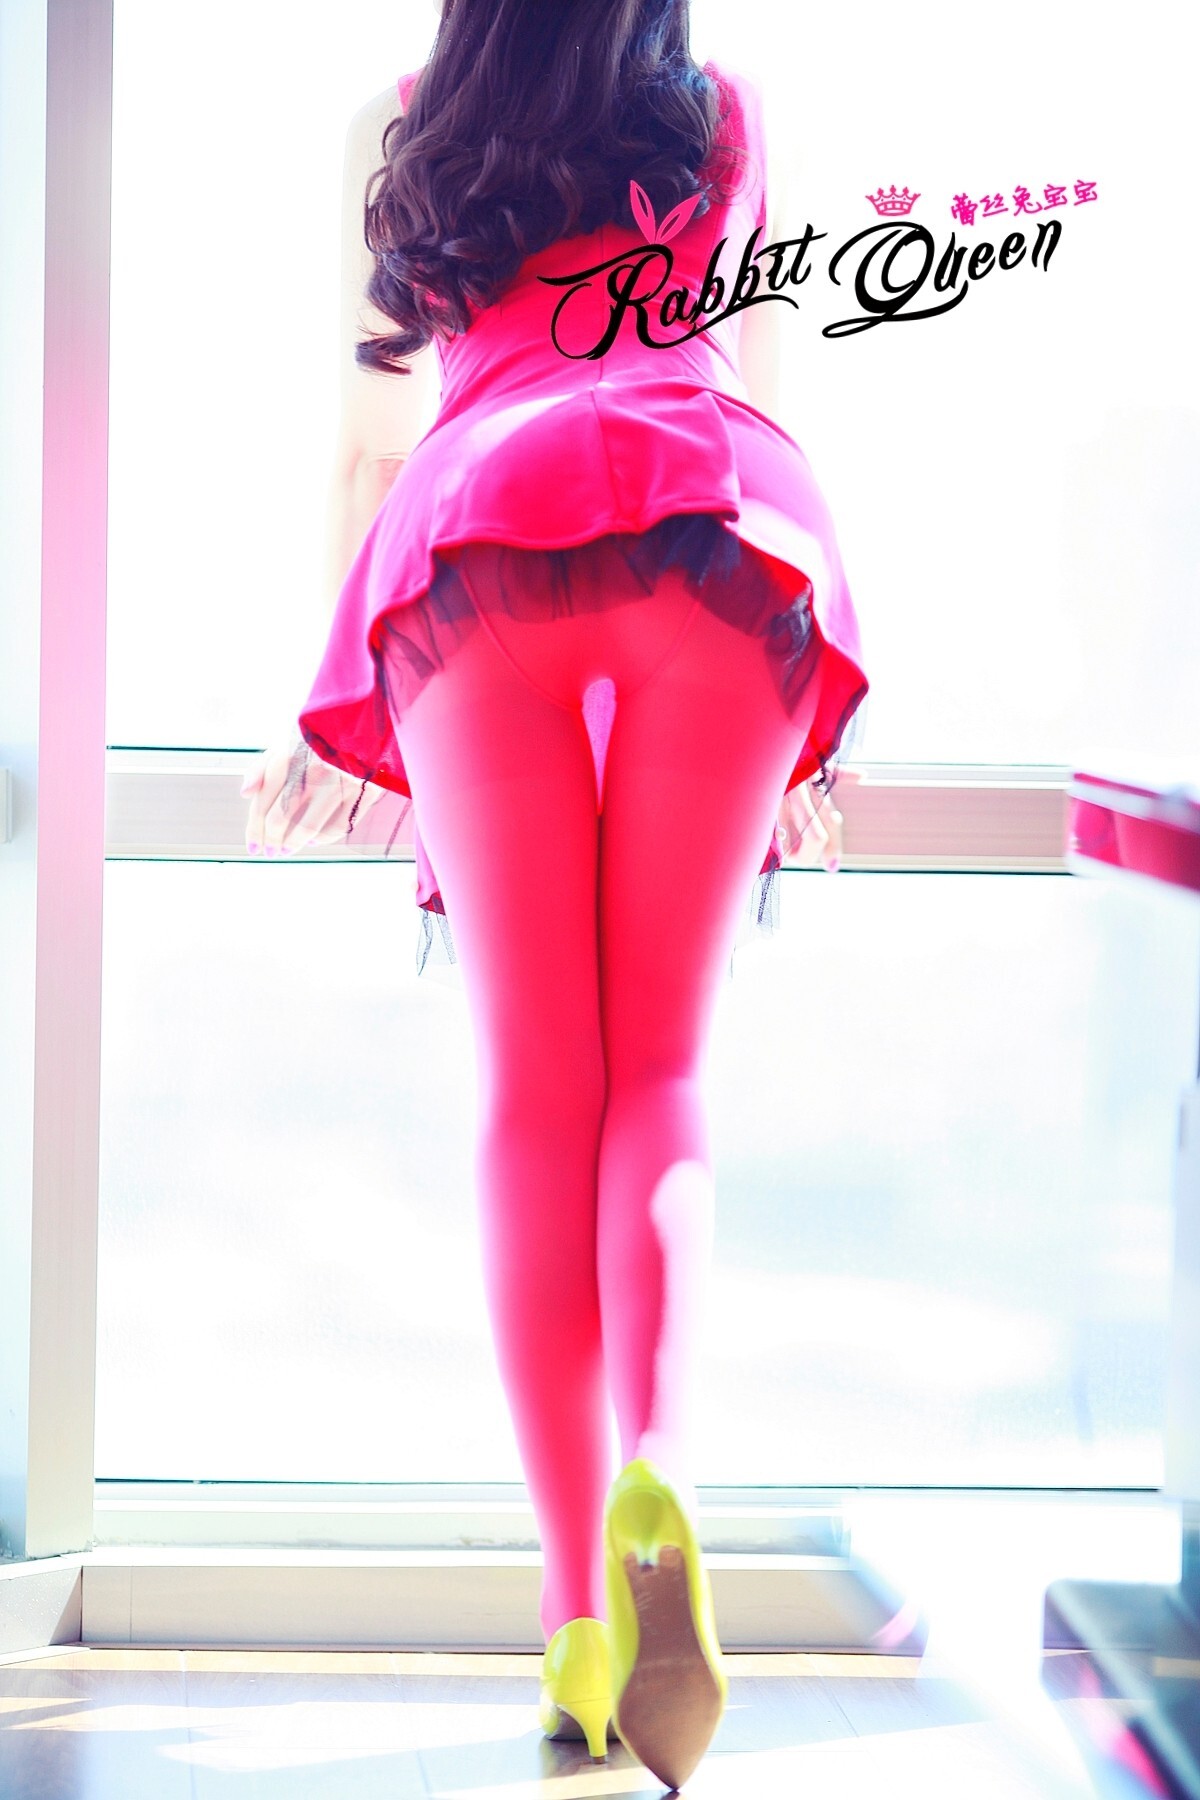 [lace Bunny] November 16, 2013 VIP set April - A, 2012 (no secondary watermark)